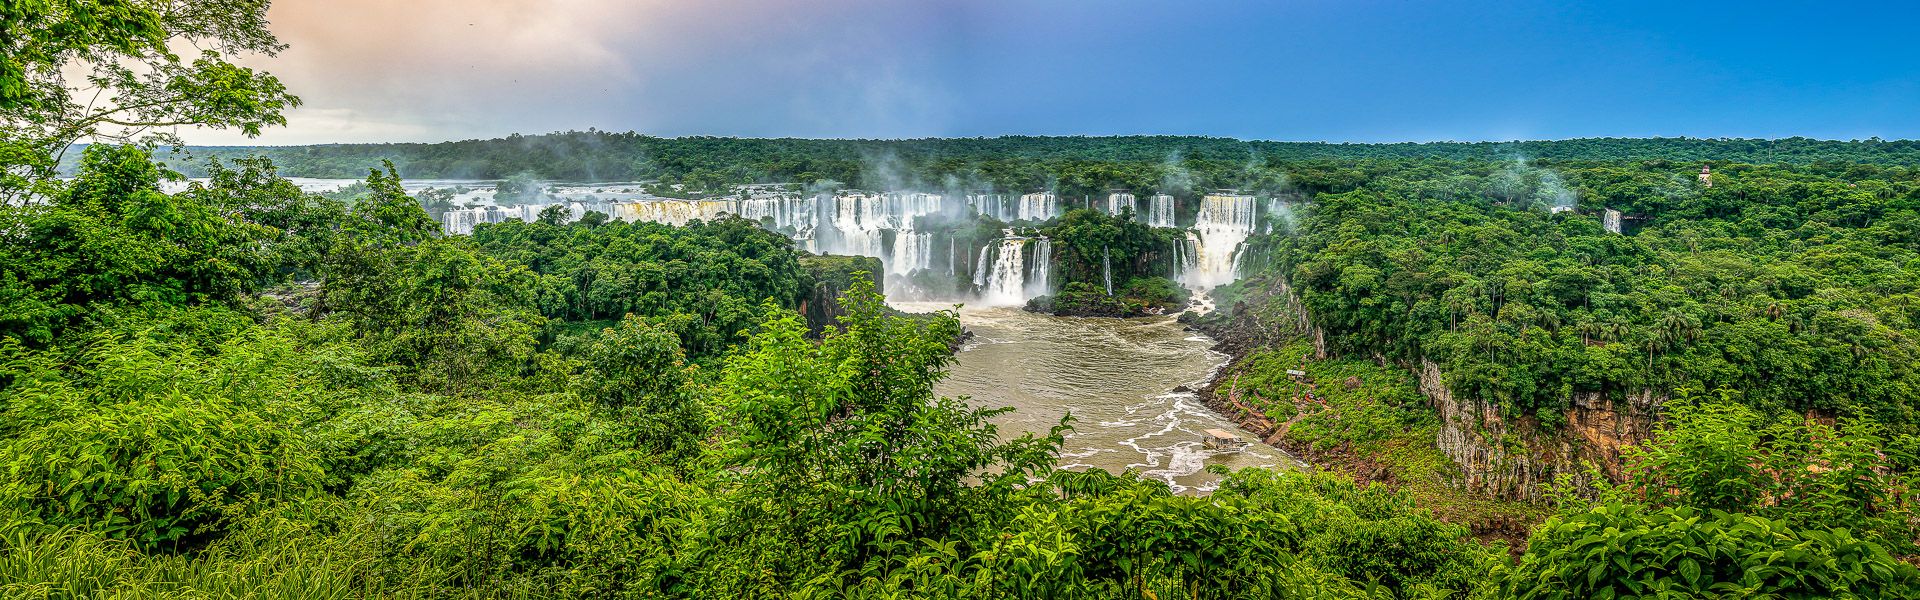 Iguaz-Wasserflle |  Heiko Behn, Pixabay / Chamleon